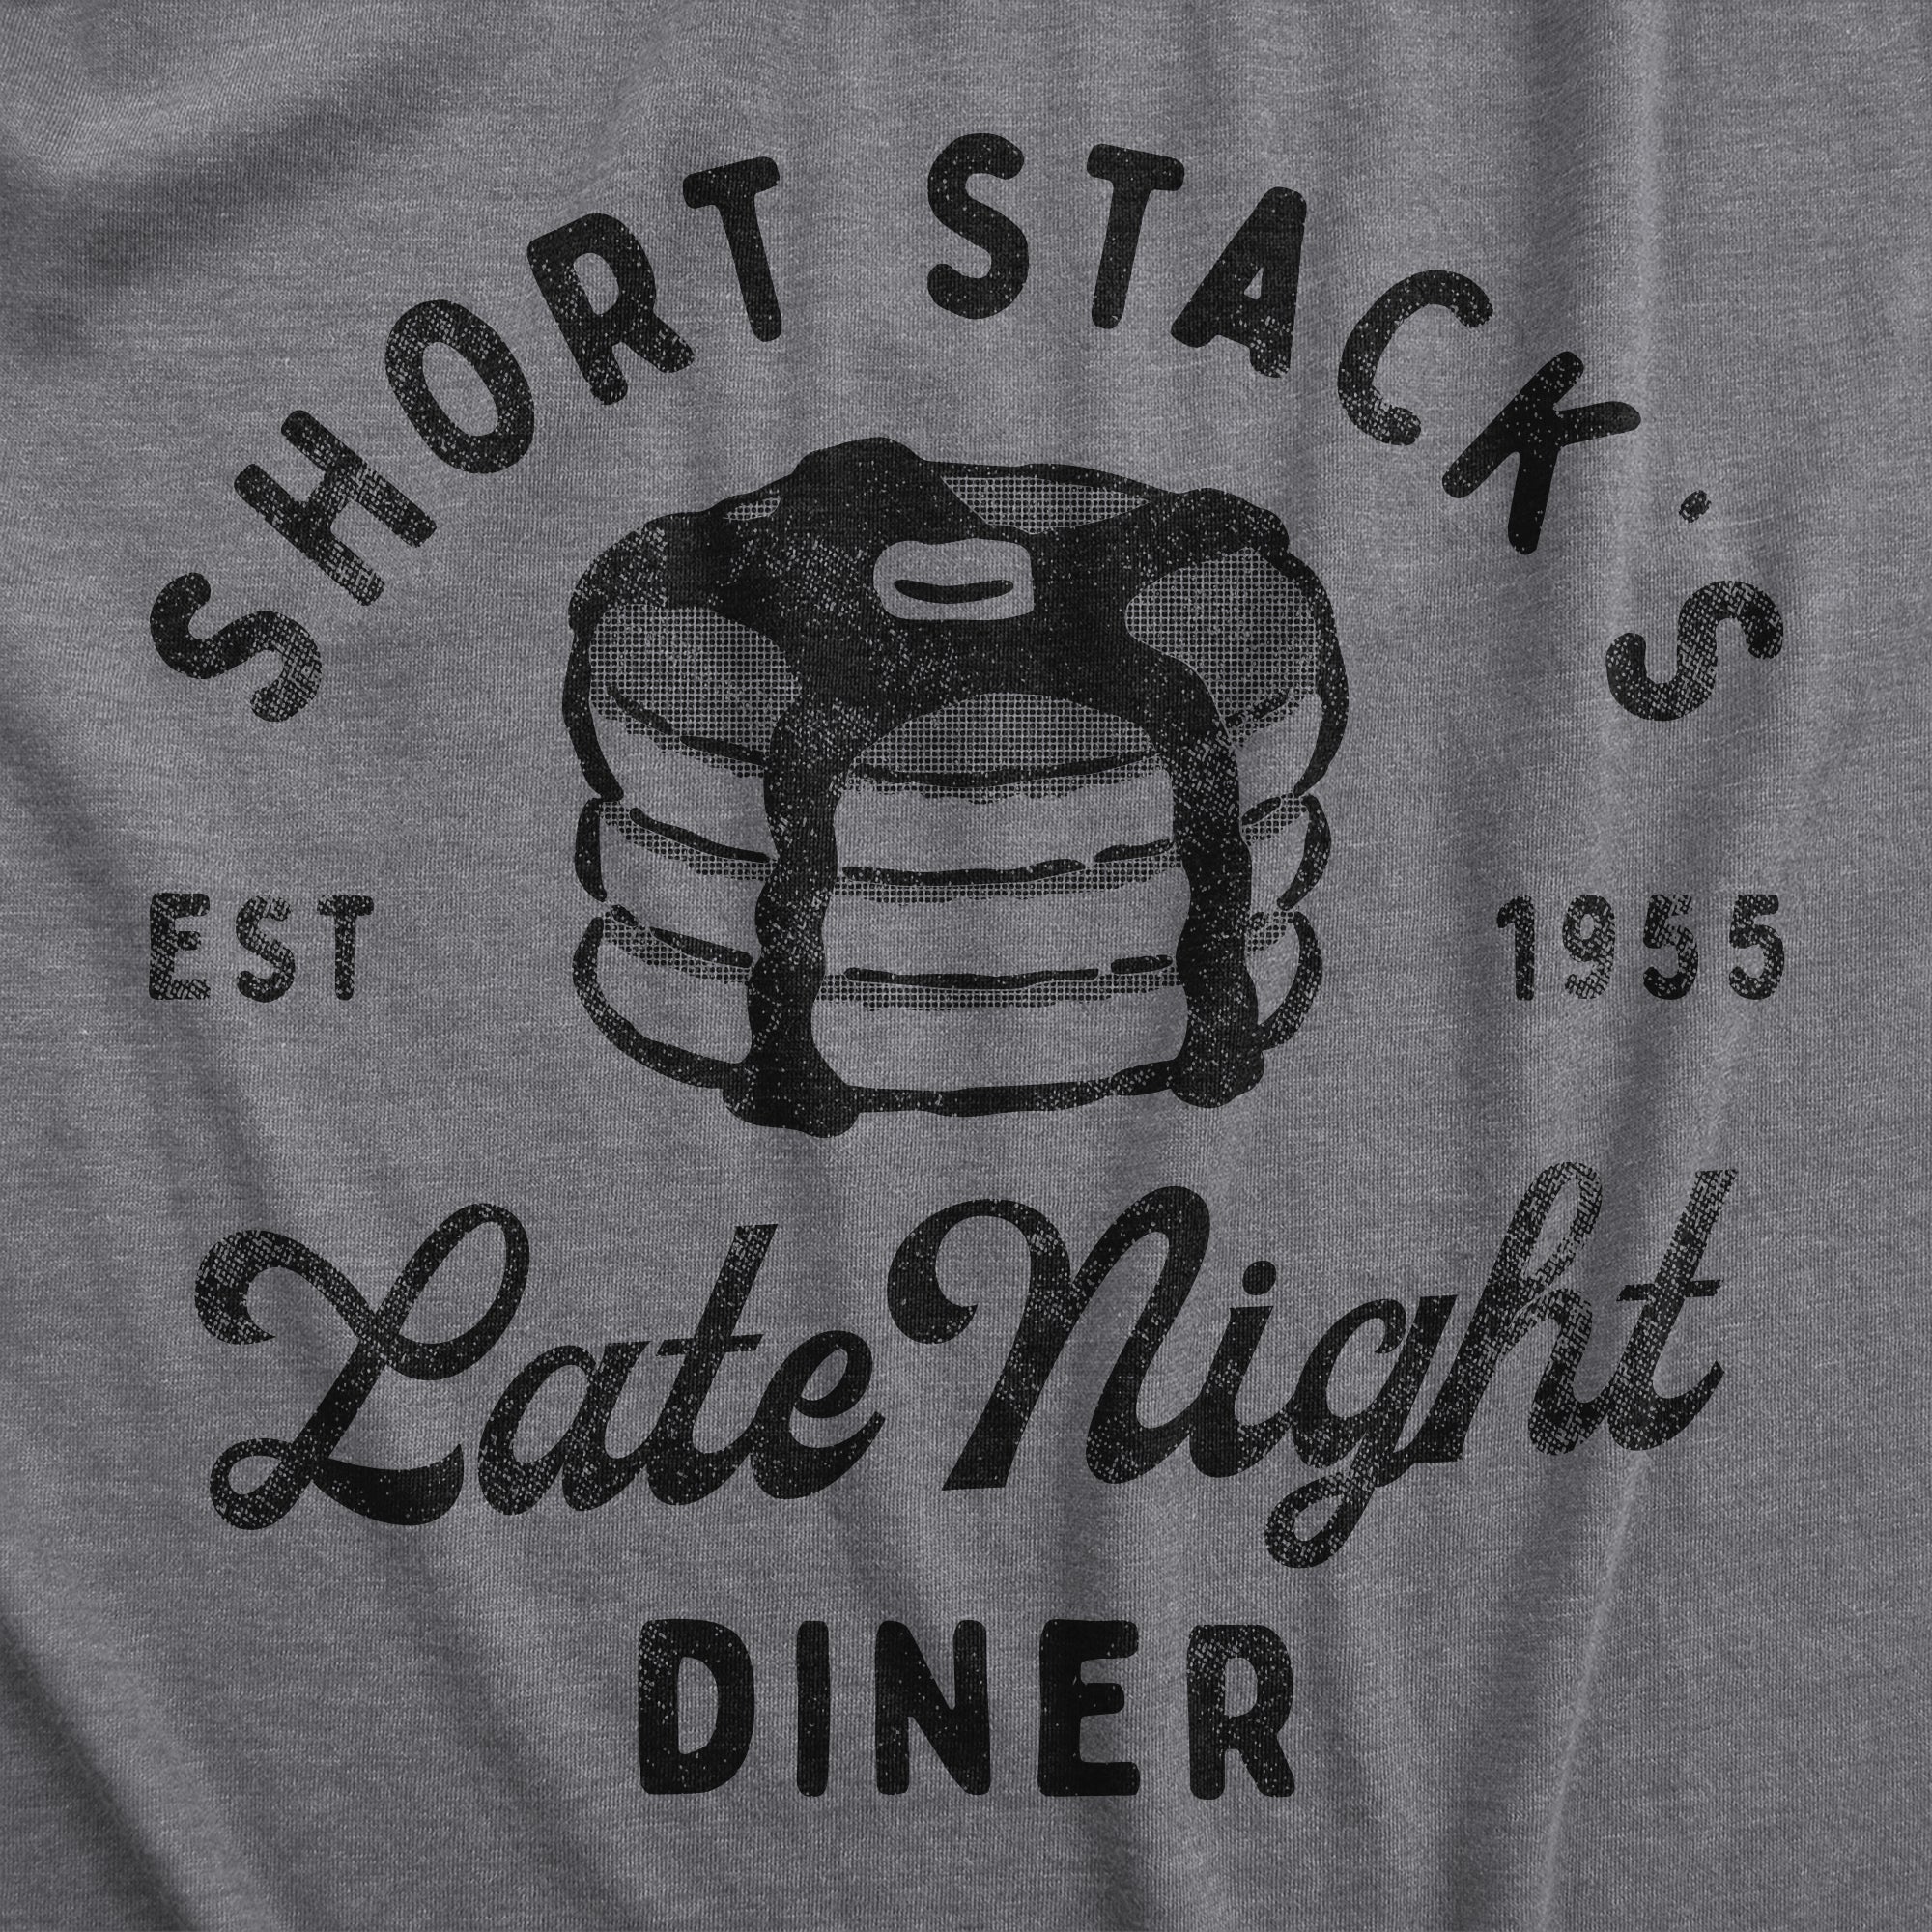 Funny Dark Heather Grey - SHORT Short Stacks Late Night Diner Onesie Nerdy Food sarcastic Tee